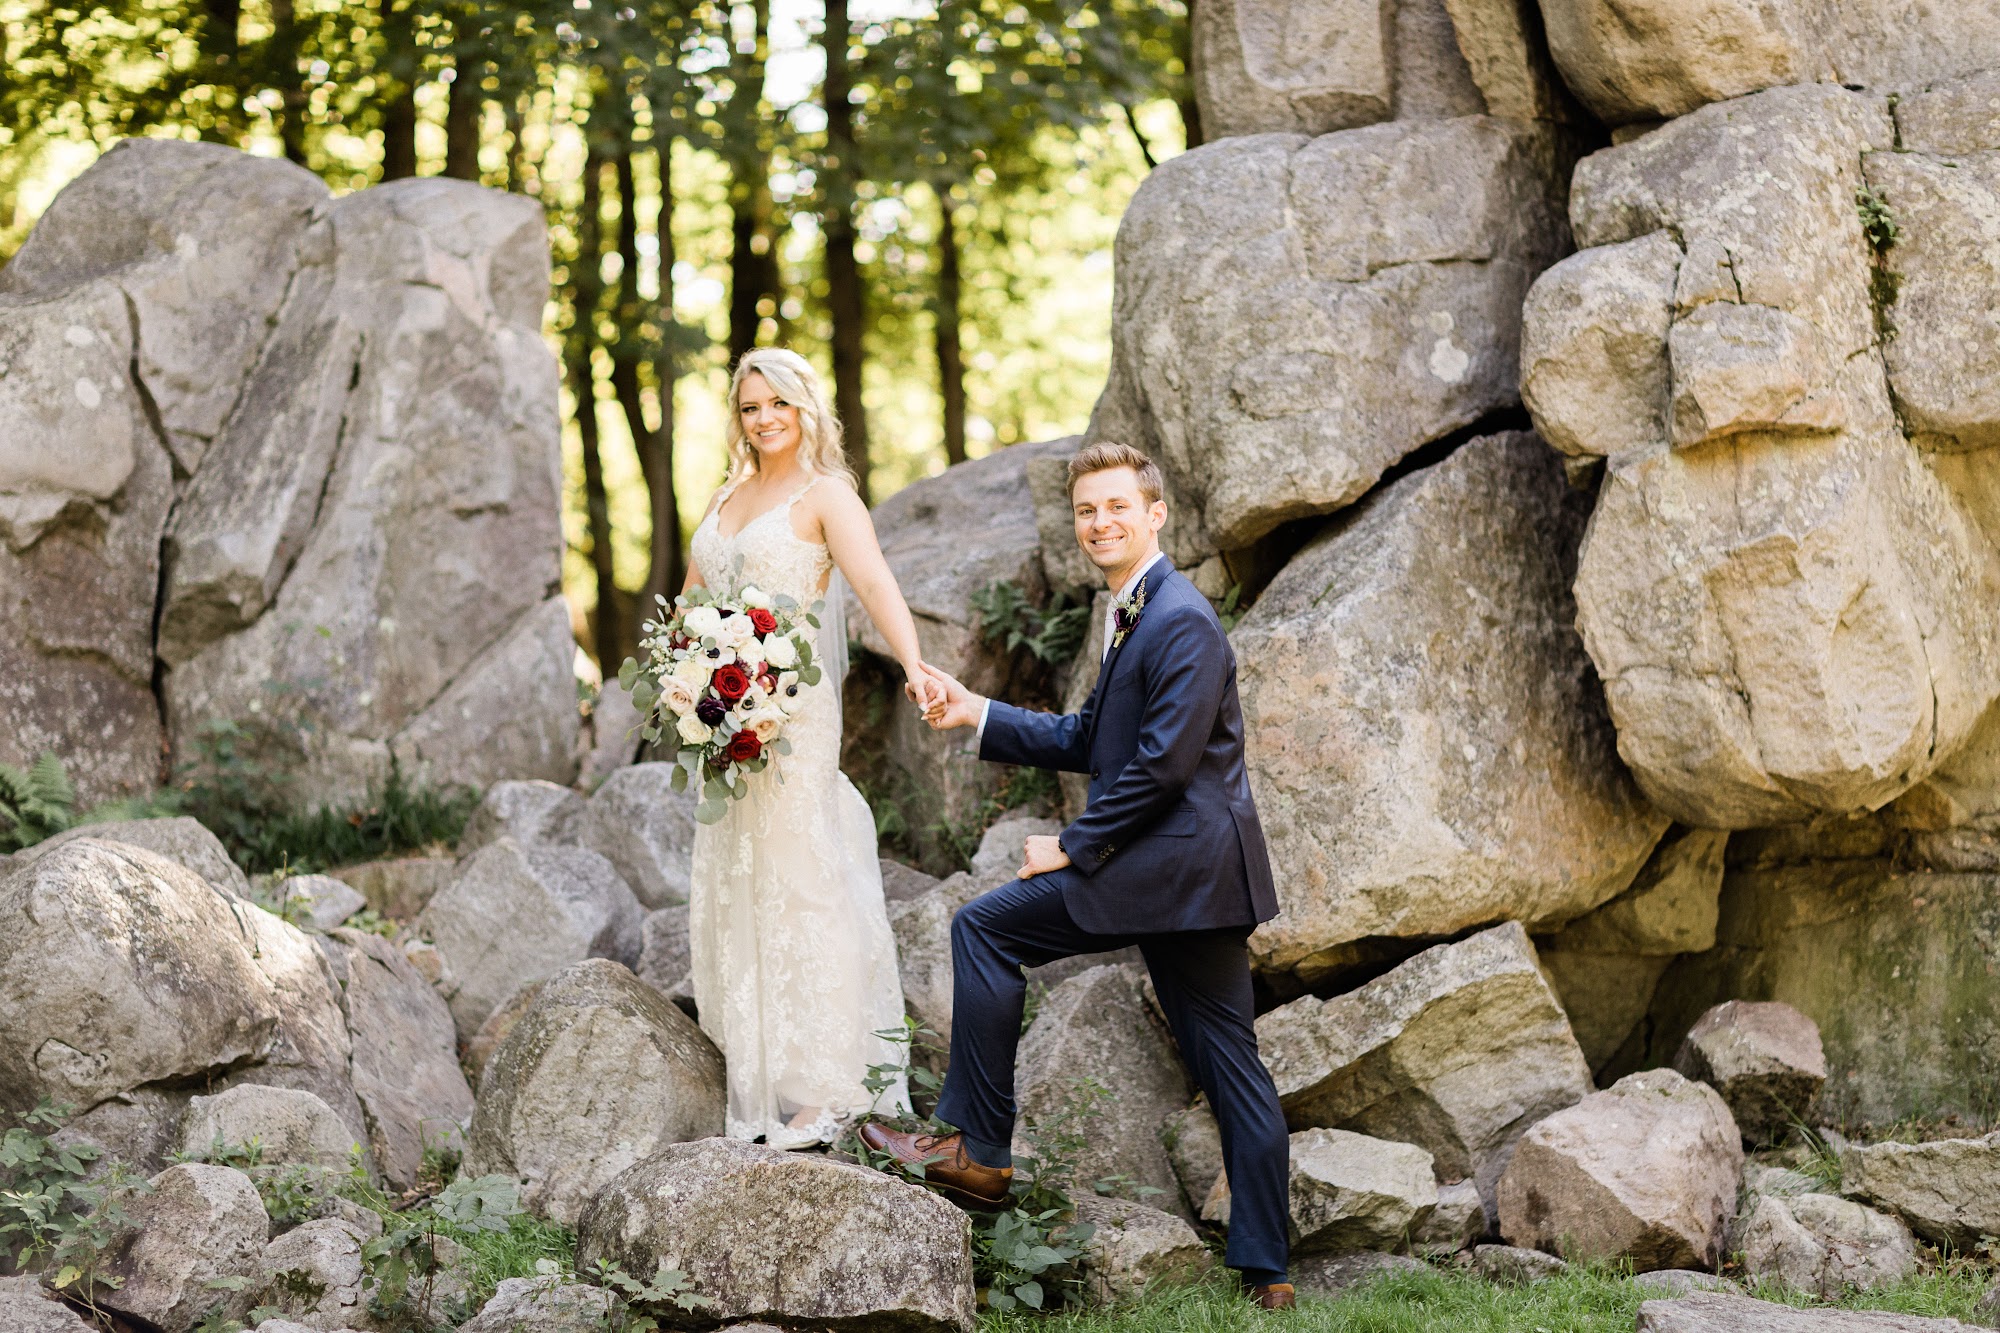 James Stokes Photography, LLC | Wisconsin Wedding Photographer